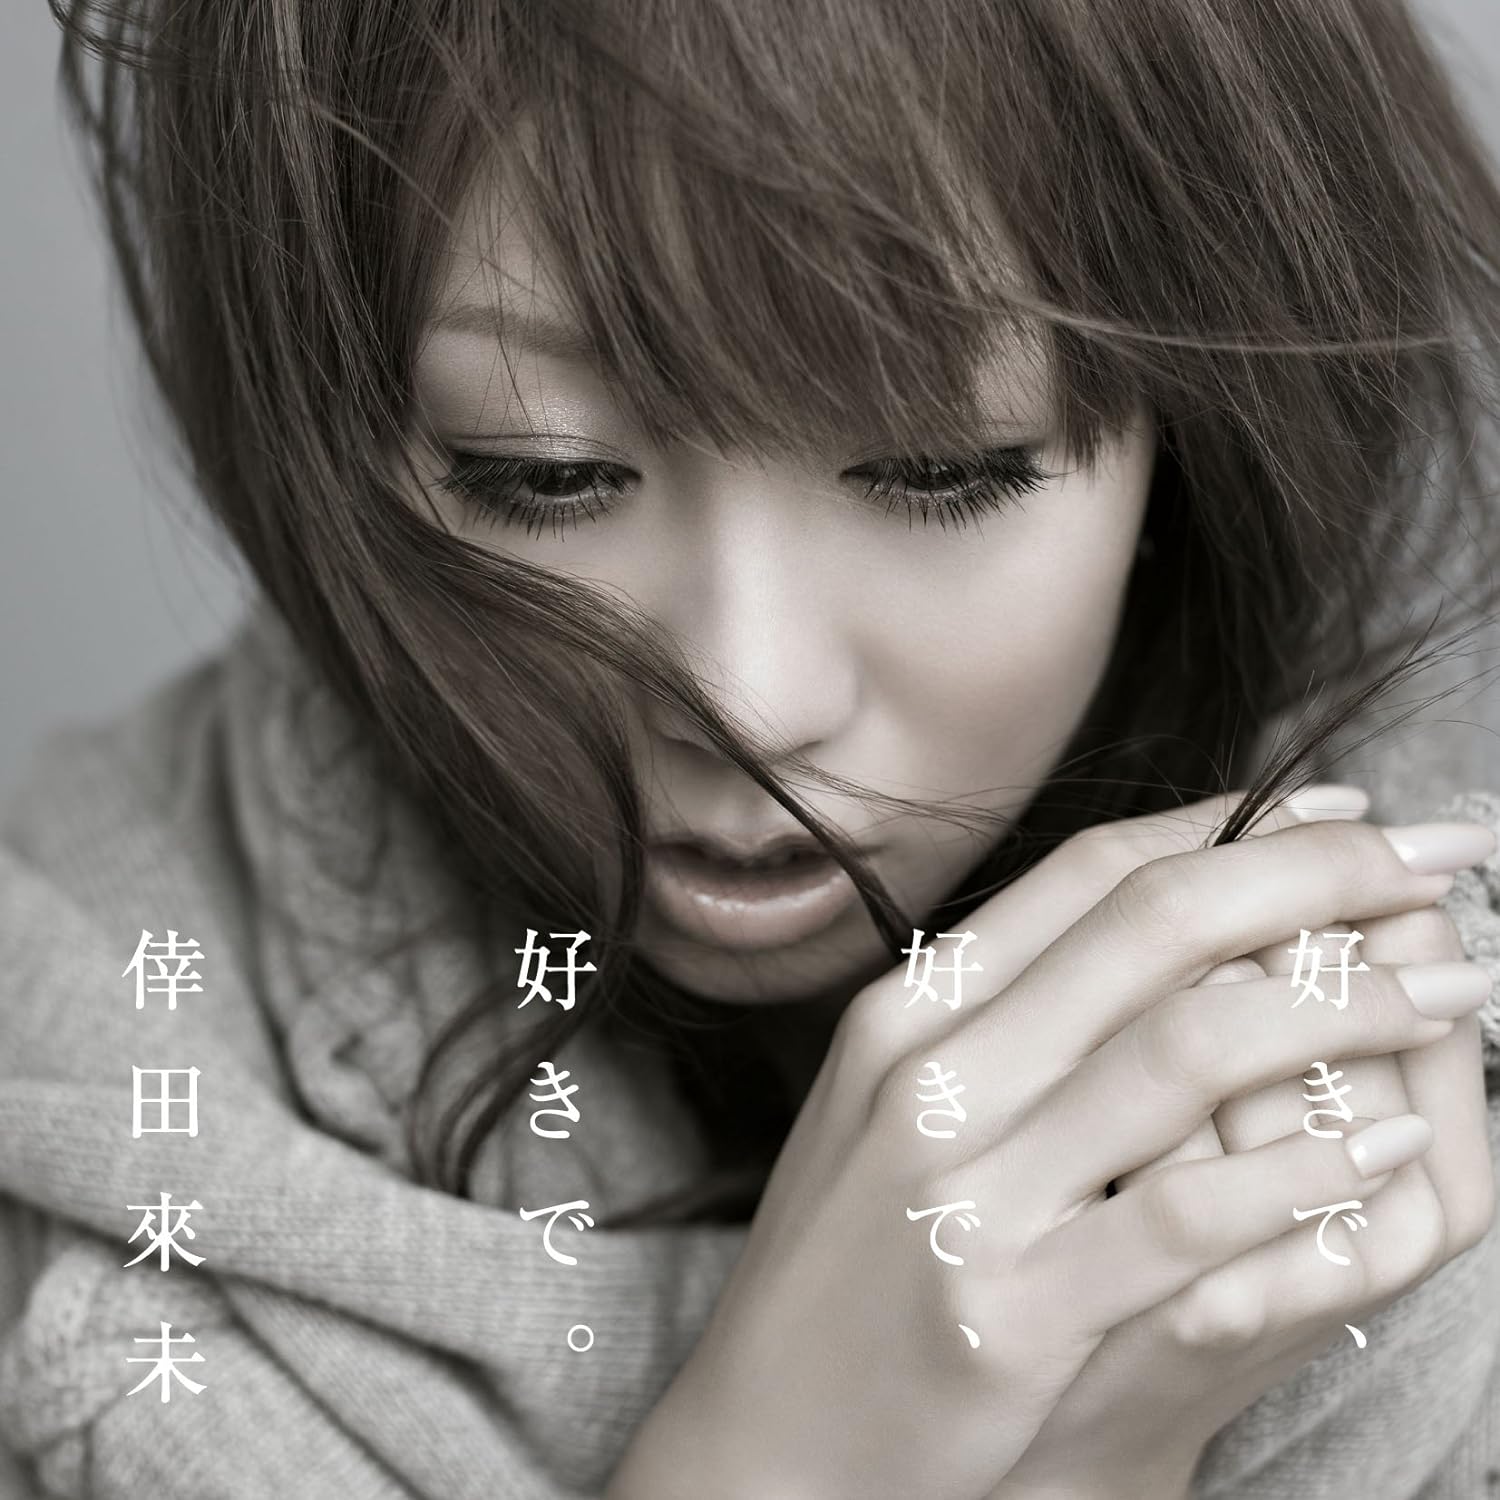 Koda Kumi — Anata Dake ga cover artwork